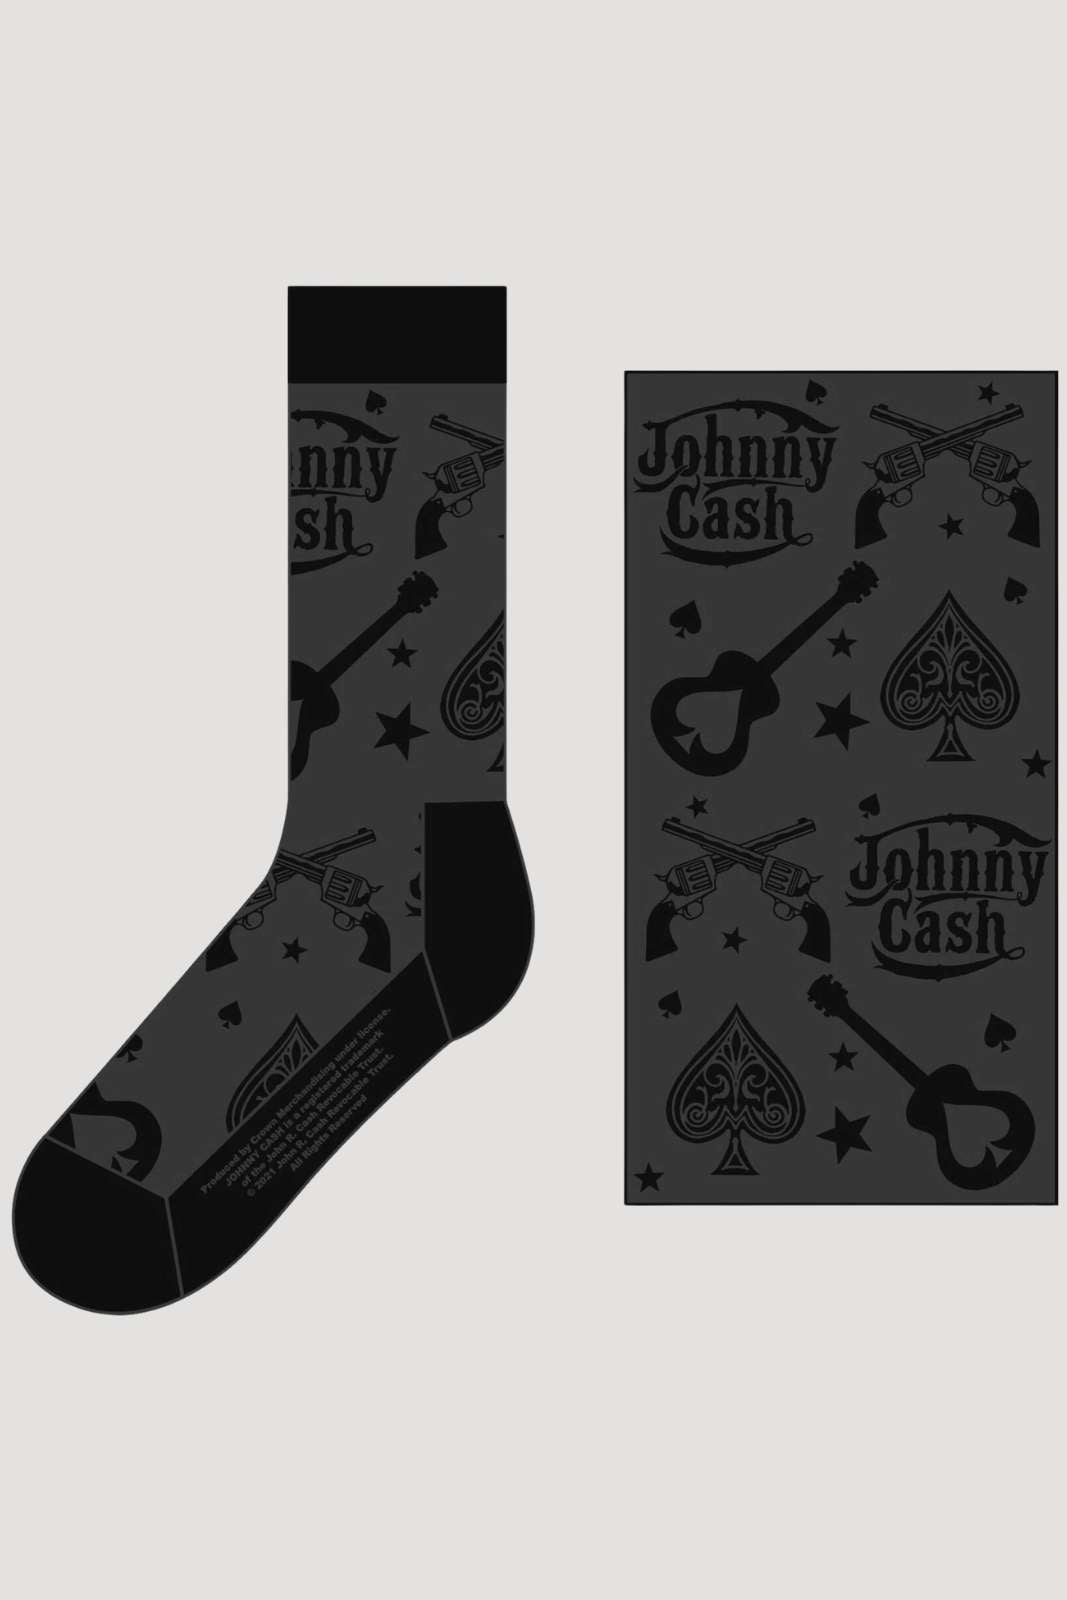 Johnny Cash Socks